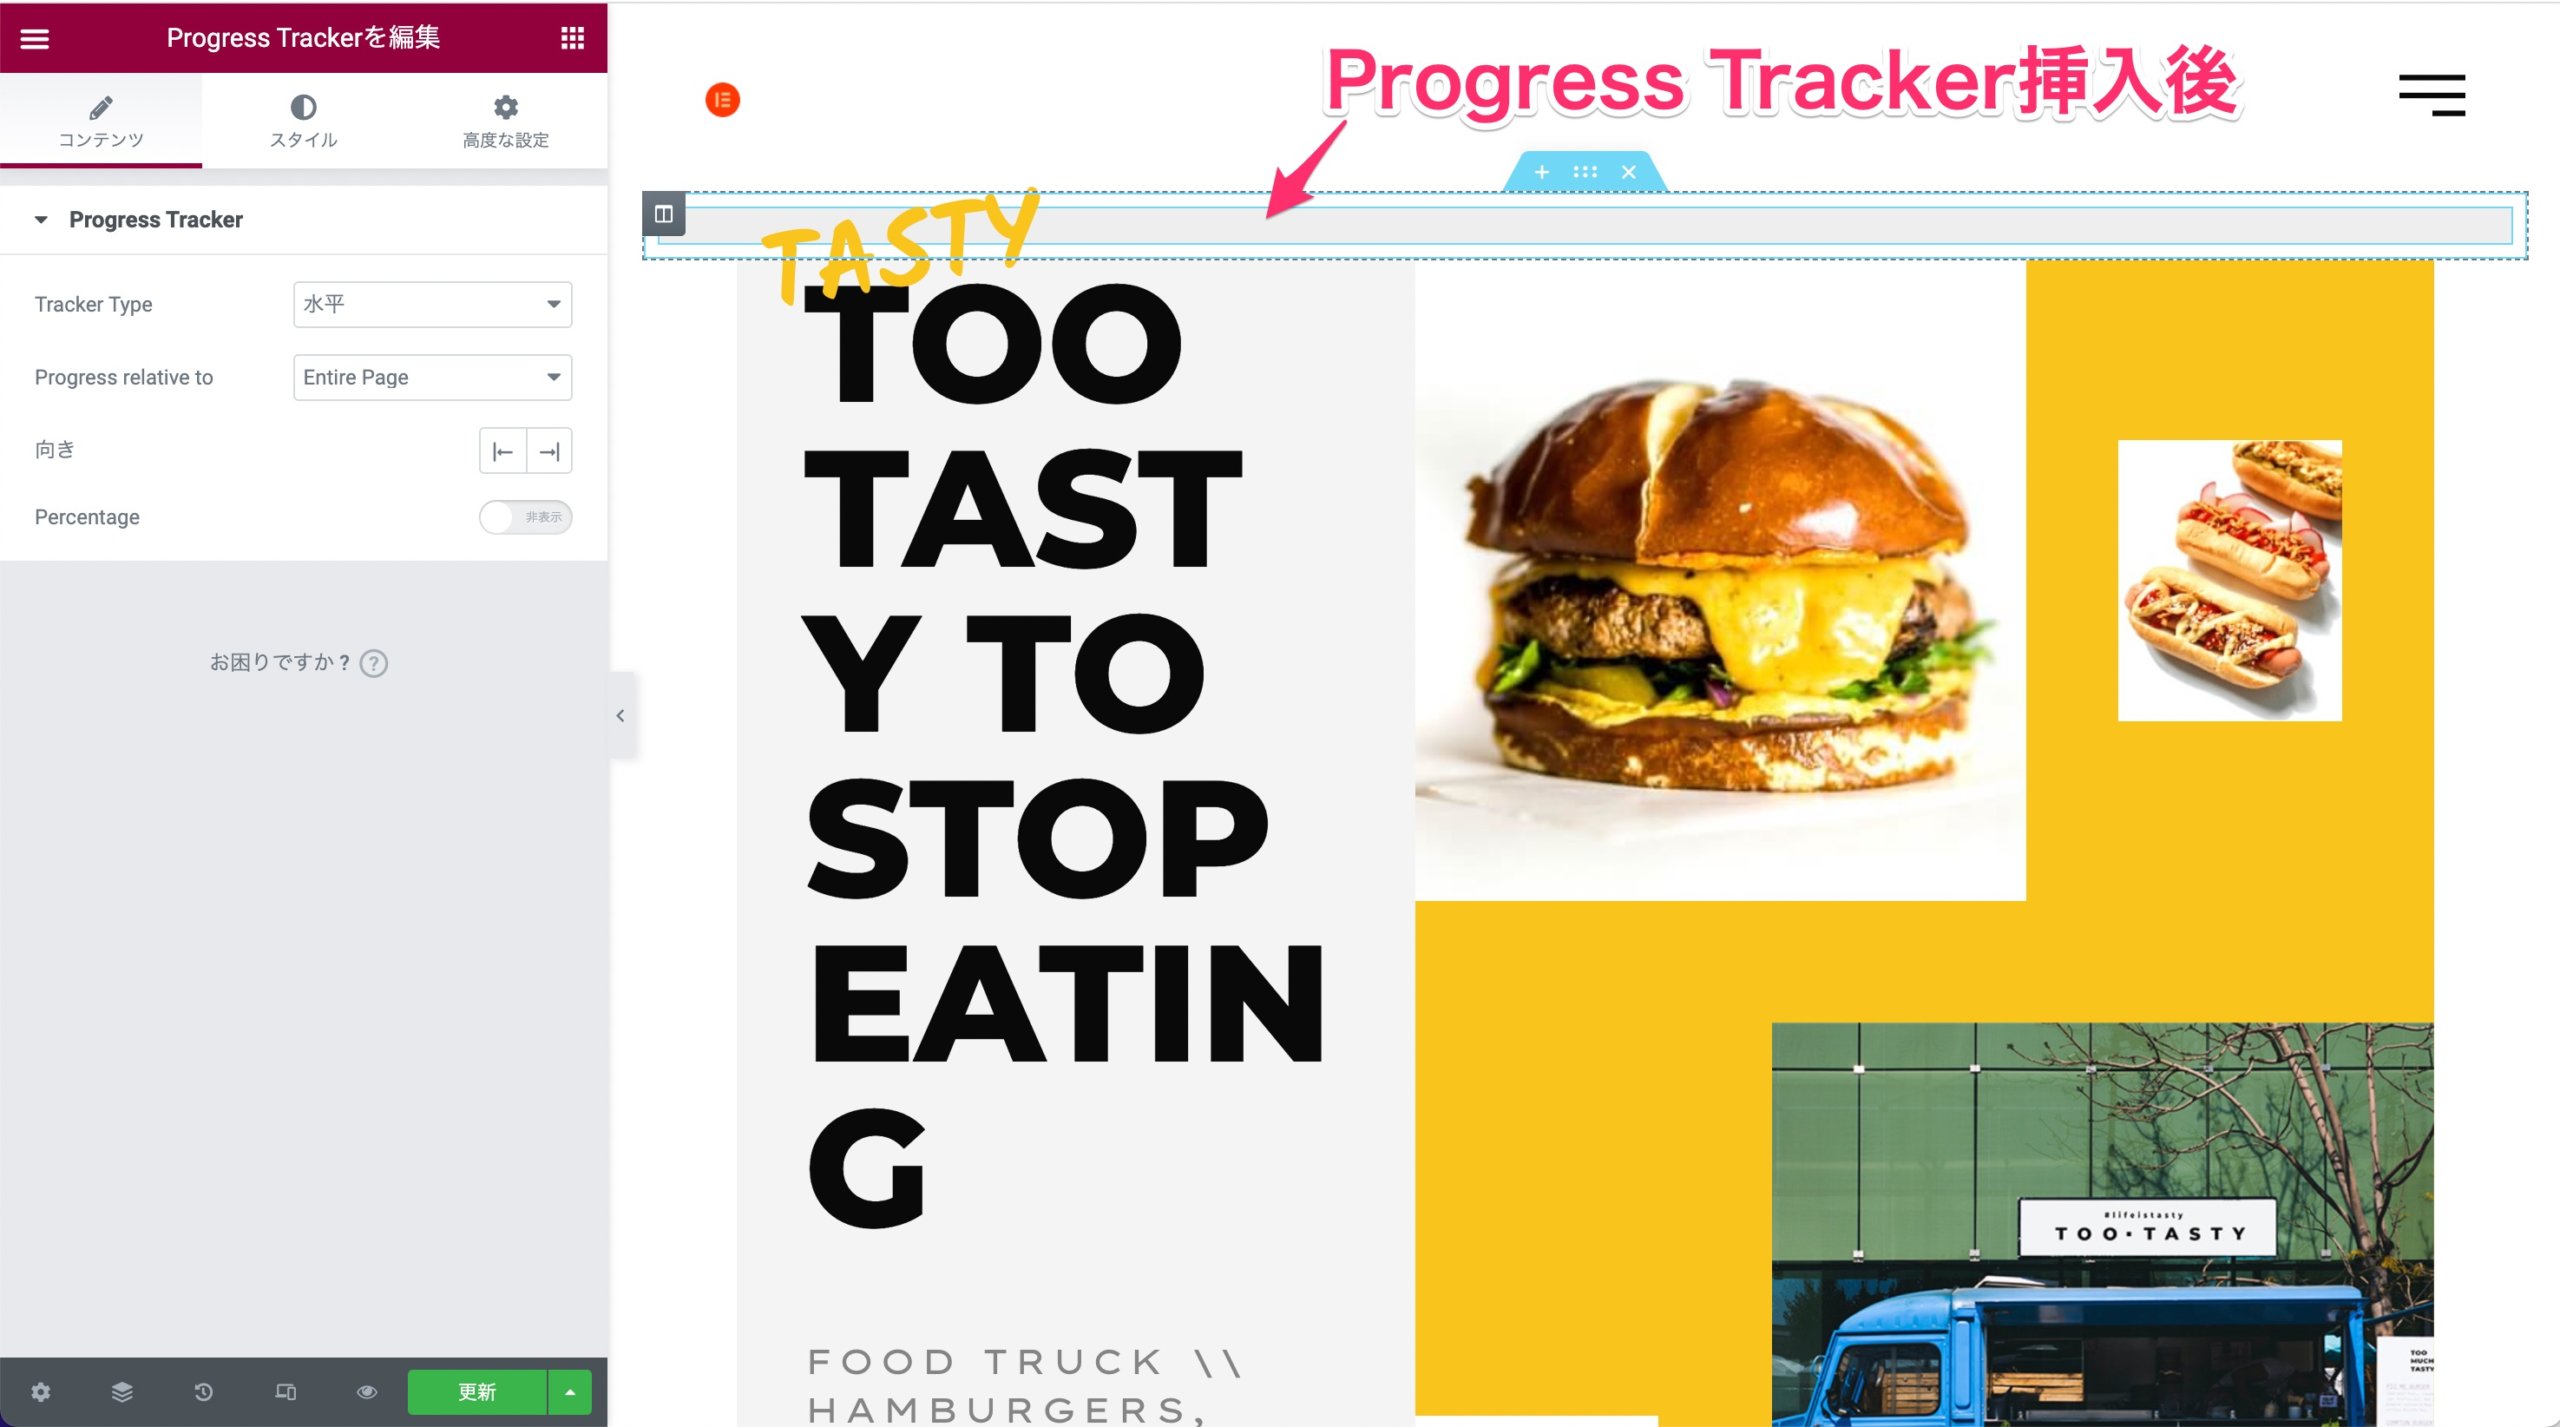 Progress Trackerウィジェット挿入後の表示が画面